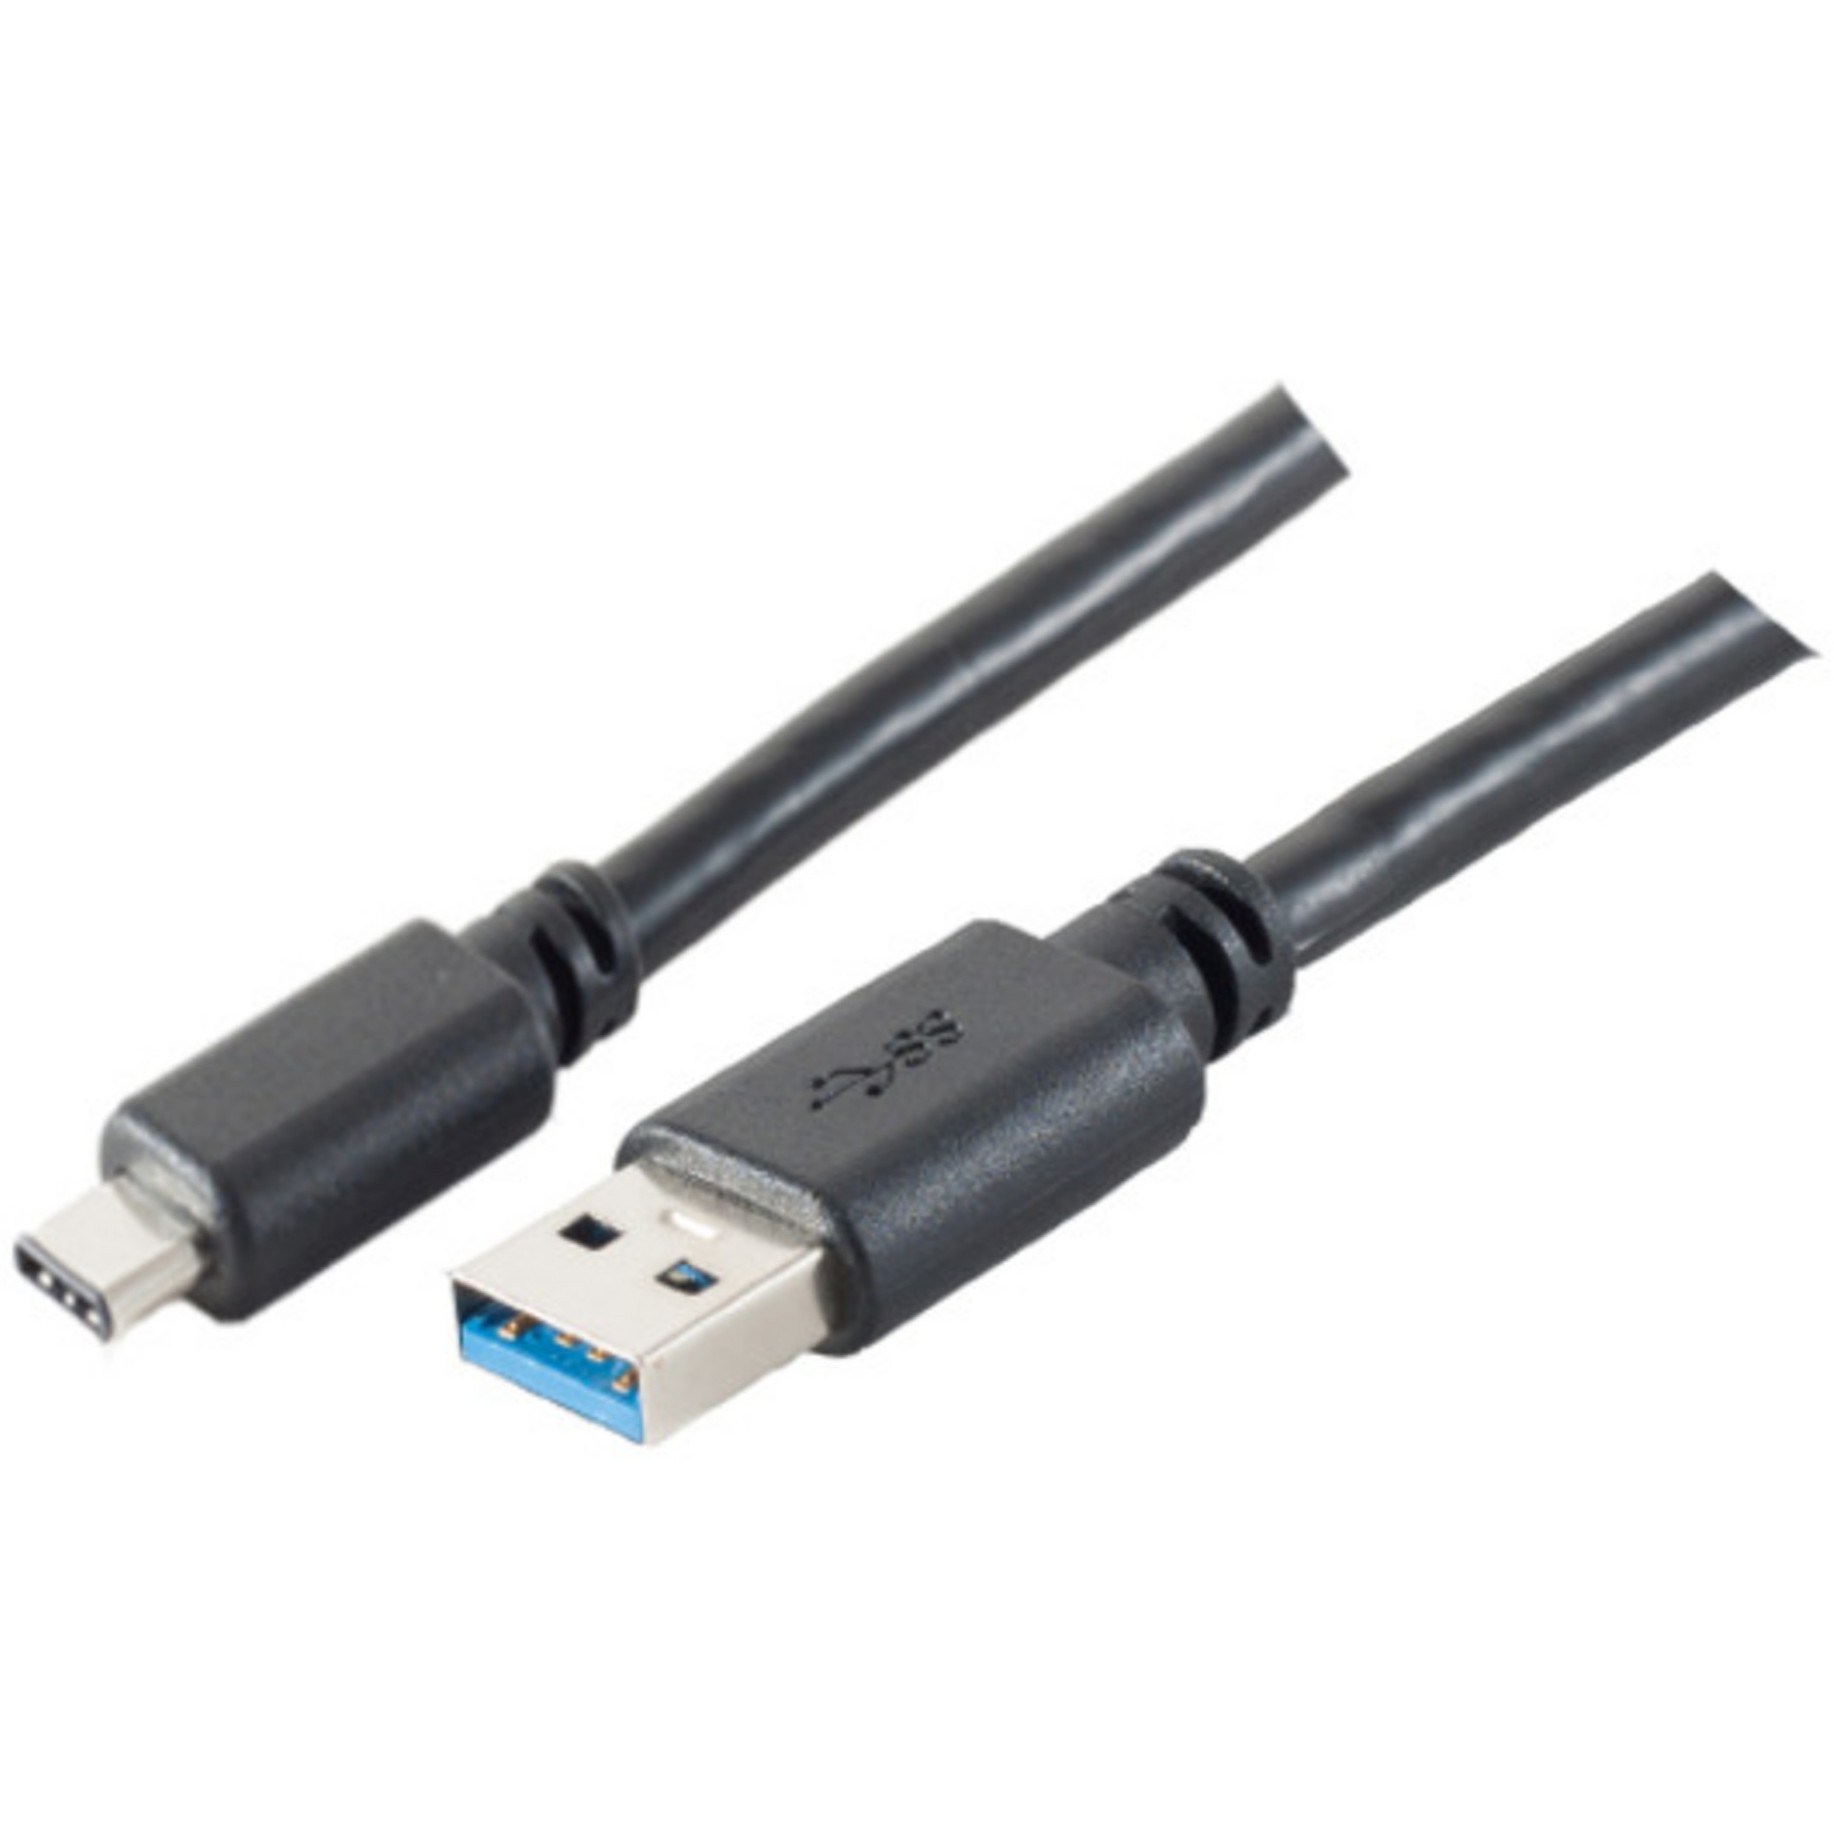 No-Name 77141-1.8, USB USB C, S-Conn 77141-1.8 USB cable  (BILD1)